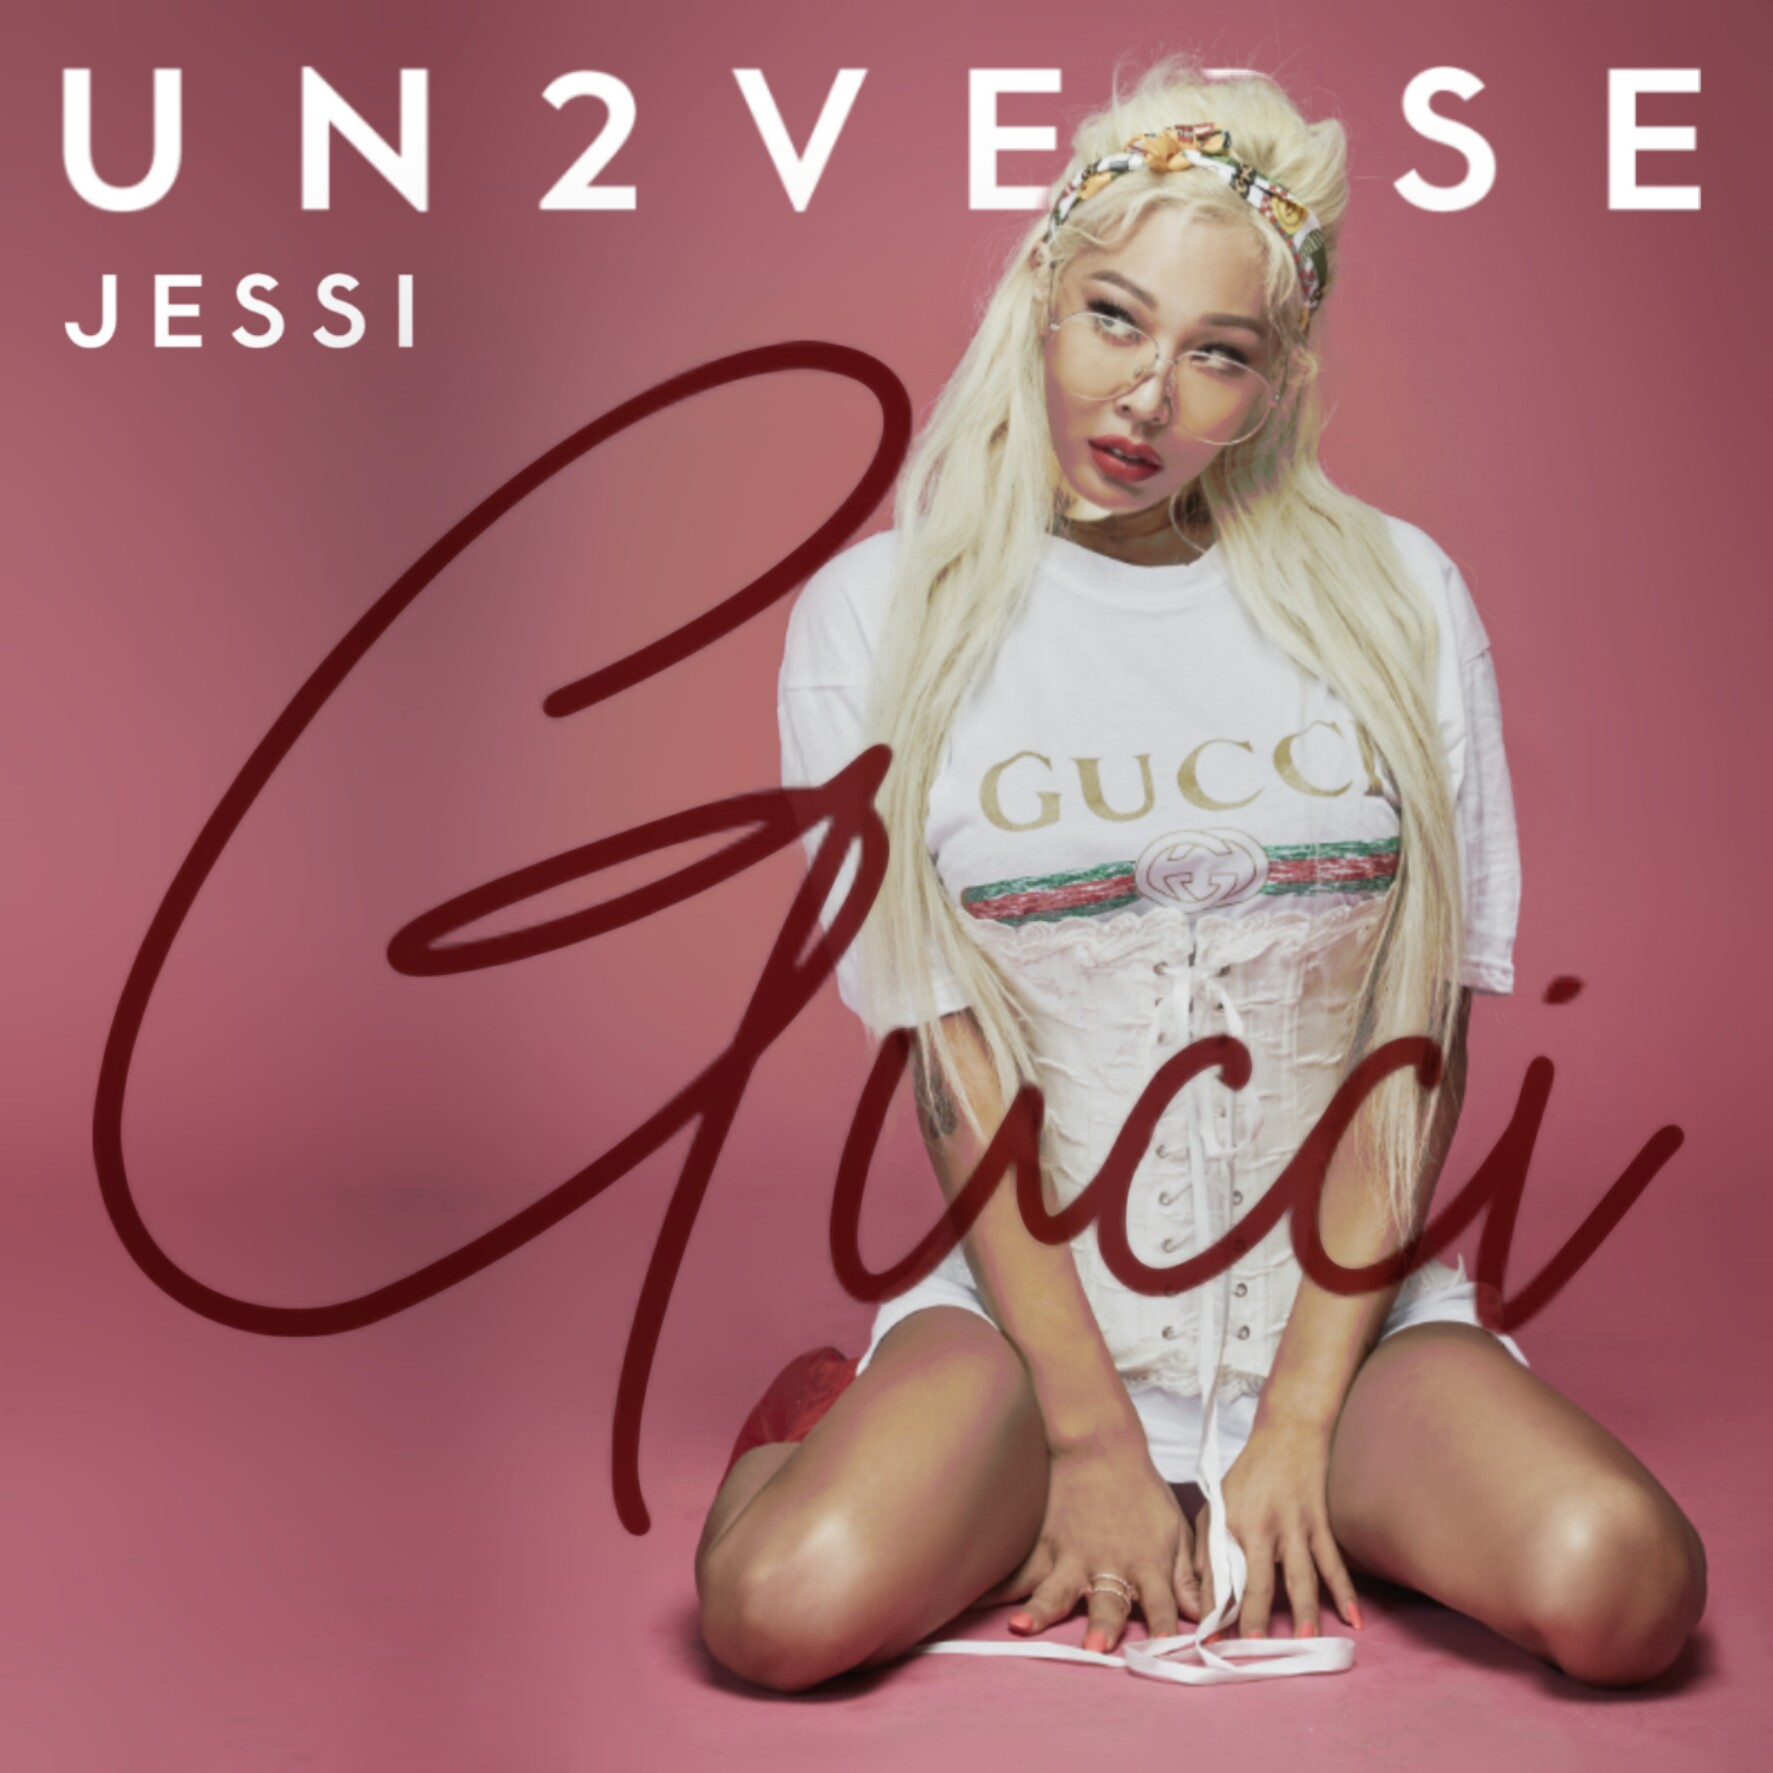 JESSI GUCCI (UN2VERSE) album cover by LEAlbum on DeviantArt